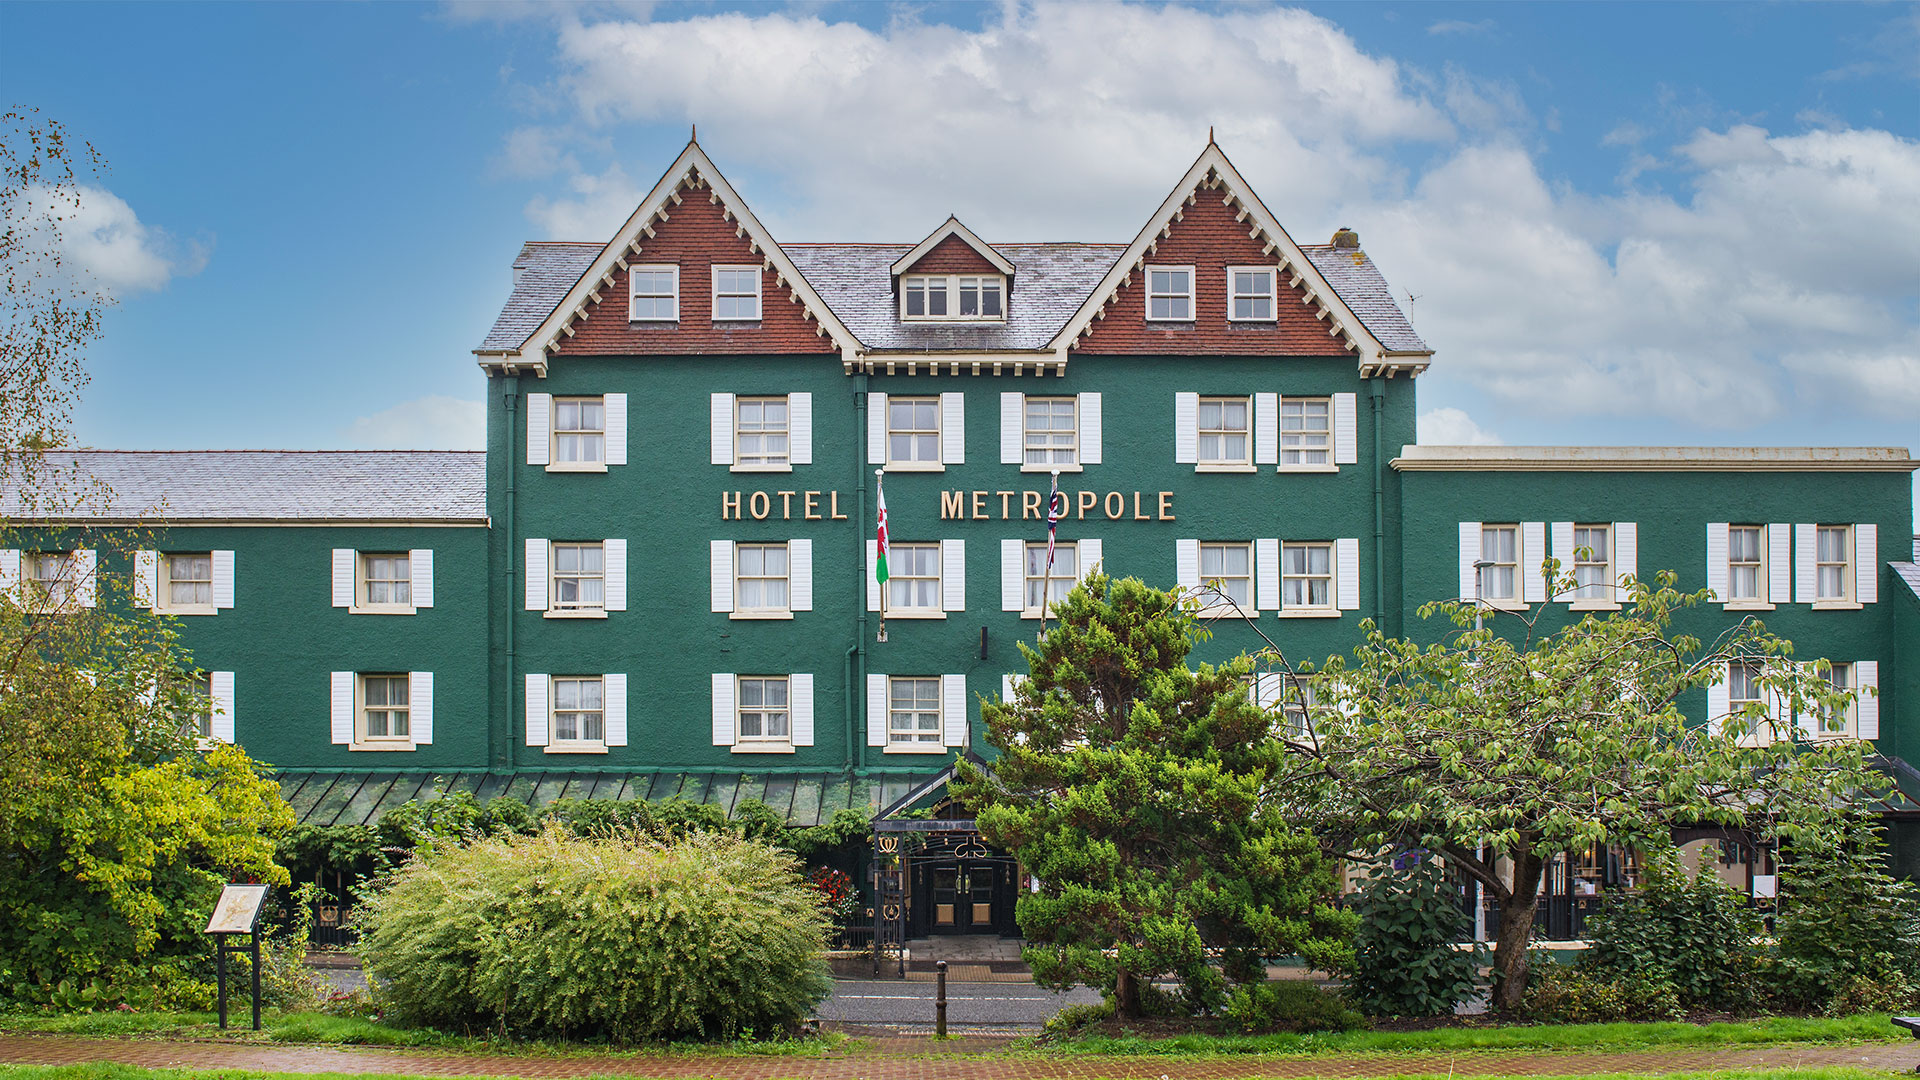 Distinctive green hotel exterior in the sunlight - Metropole Hotel & Spa, Llandrindod Wells